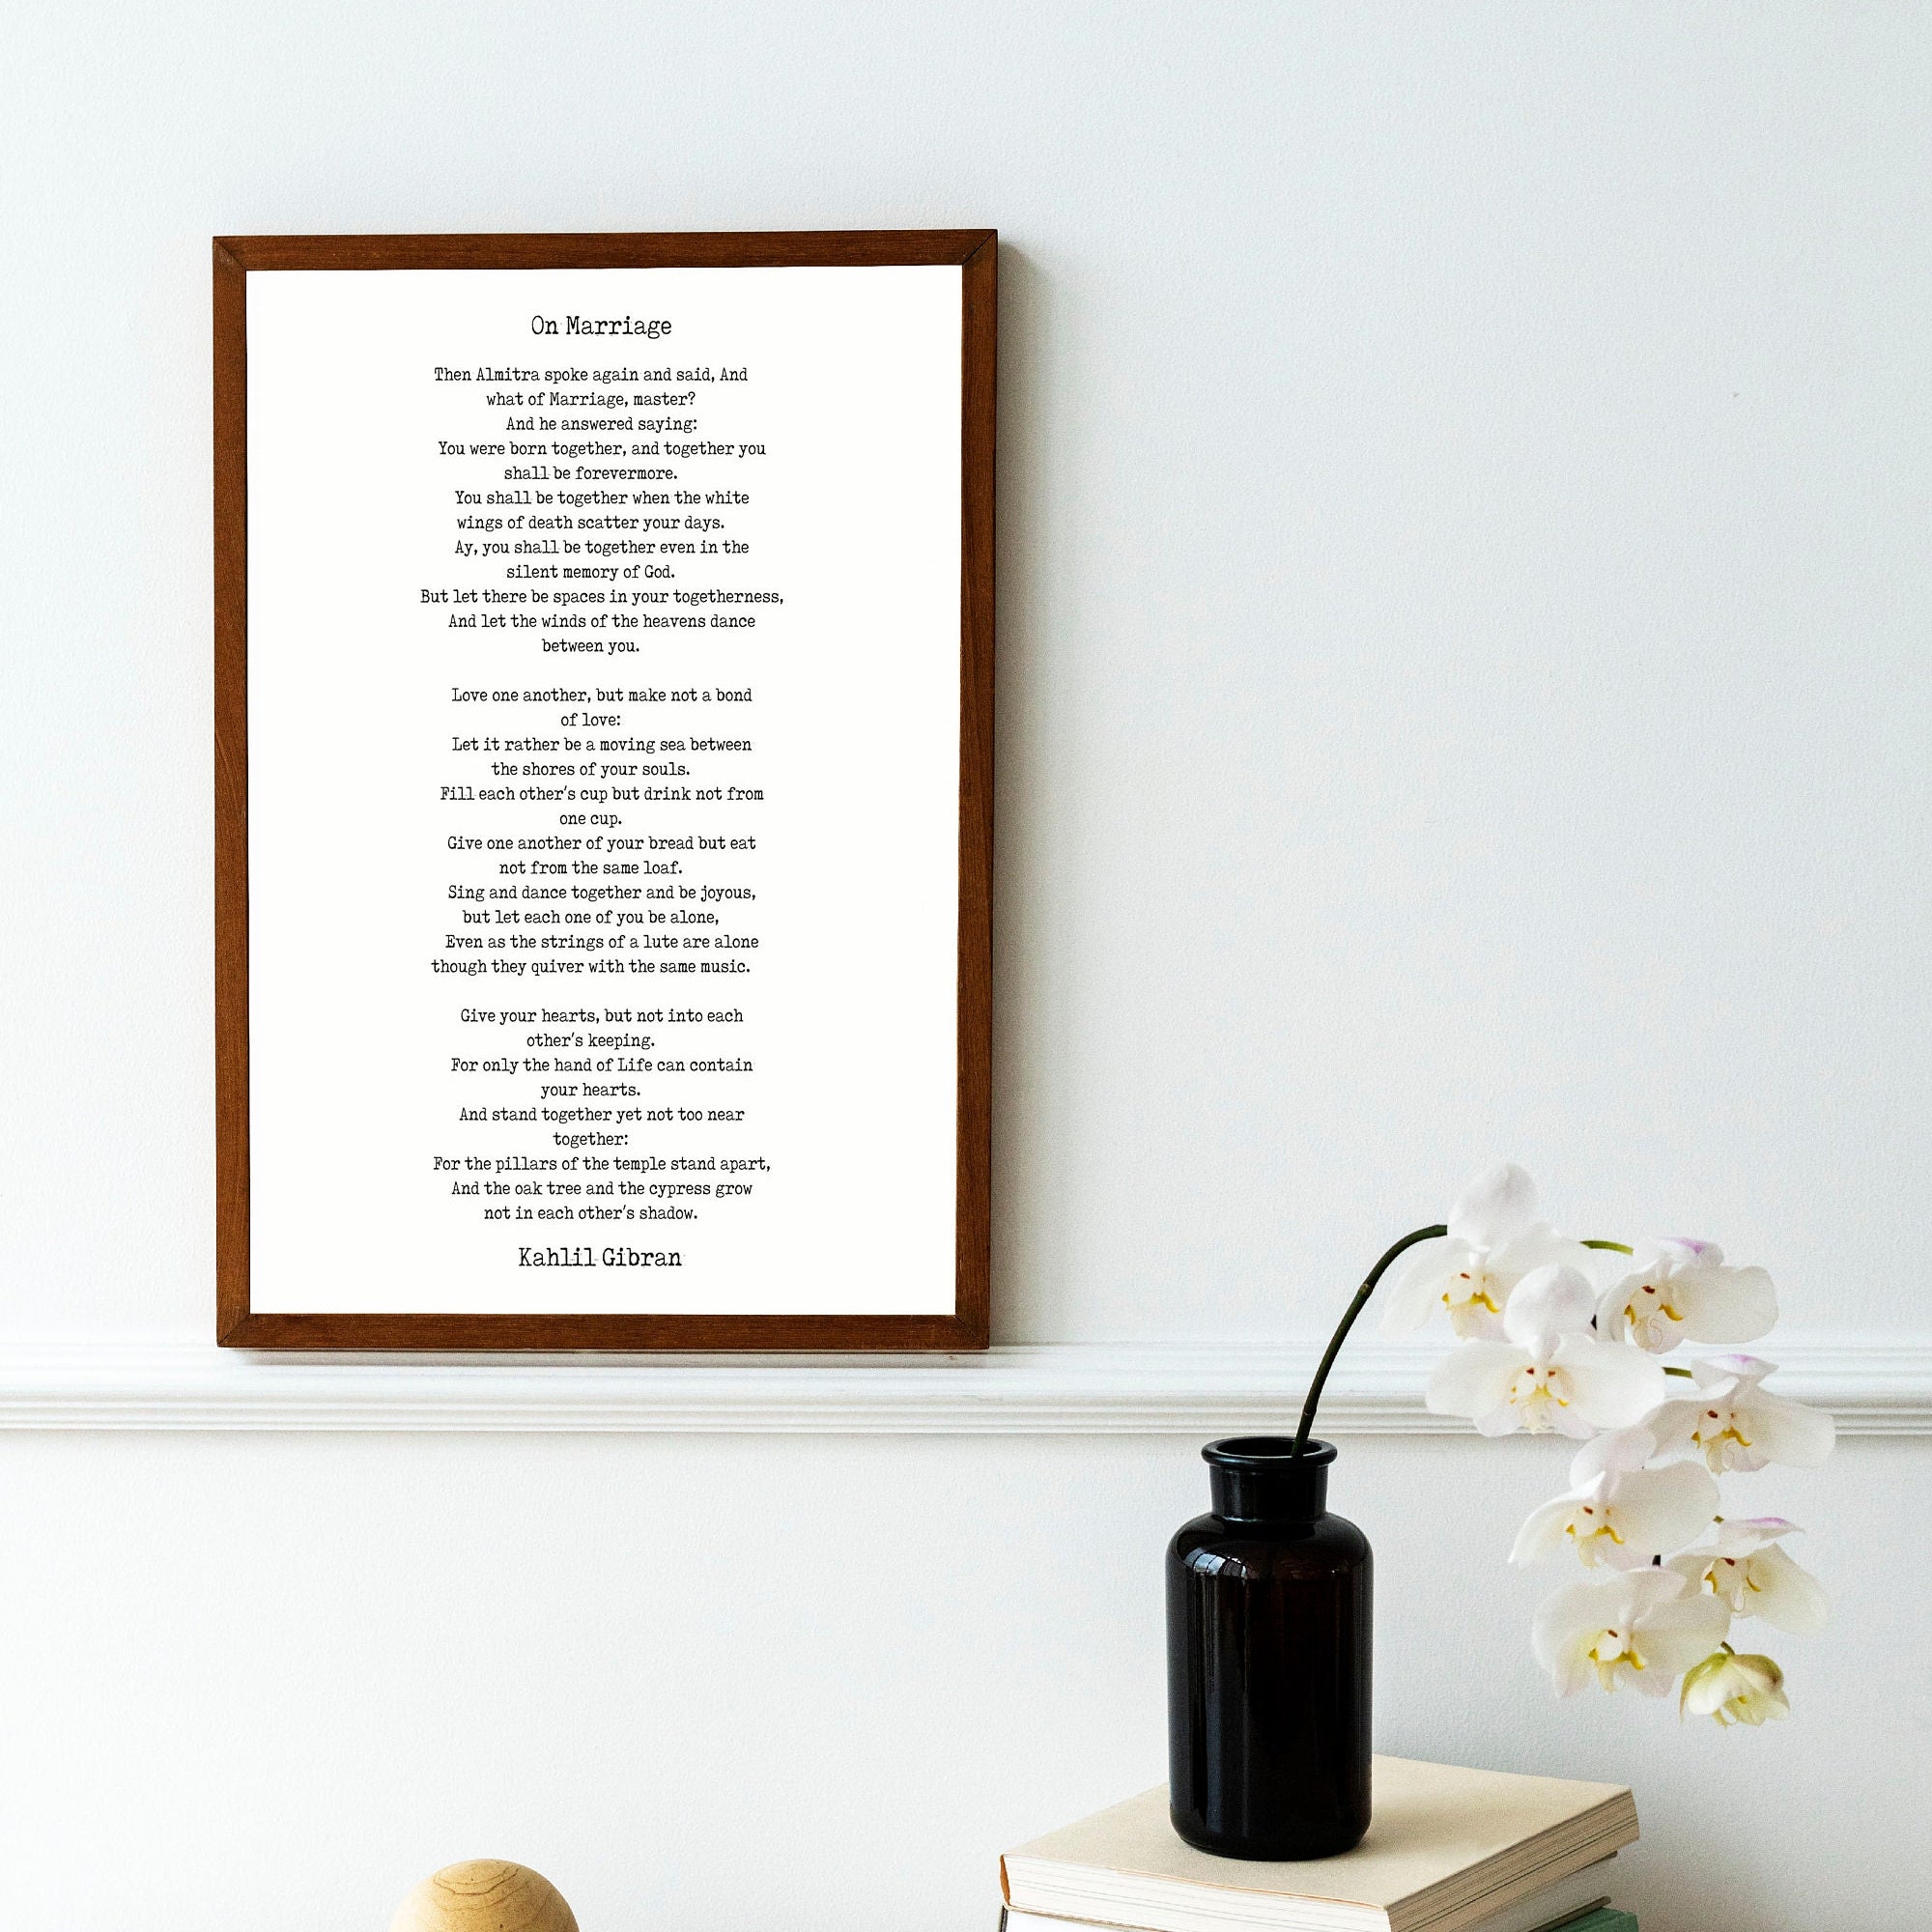 On Marriage Kahlil Gibran Wall Art Prints Framed or Unframed in Black & White, Love Poem Literary Wall Art Decor